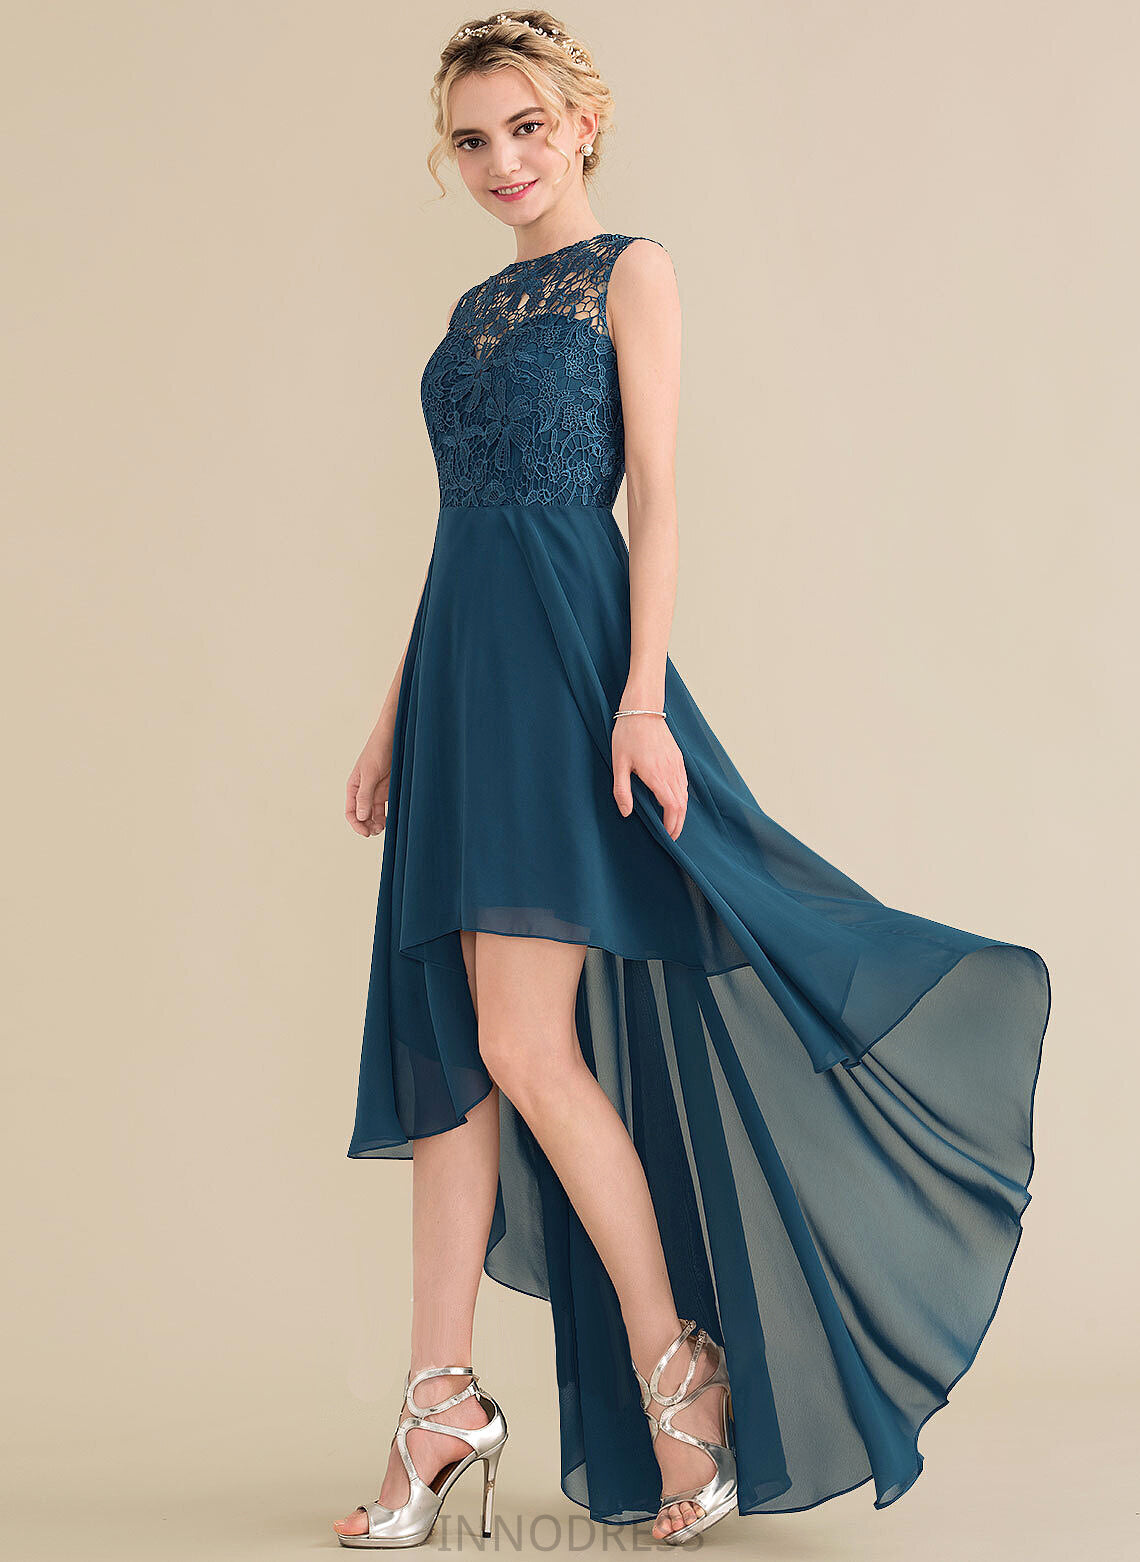 A-Line Length Lace Asymmetrical Silhouette Fabric Straps Neckline ScoopNeck Alejandra Natural Waist A-Line/Princess